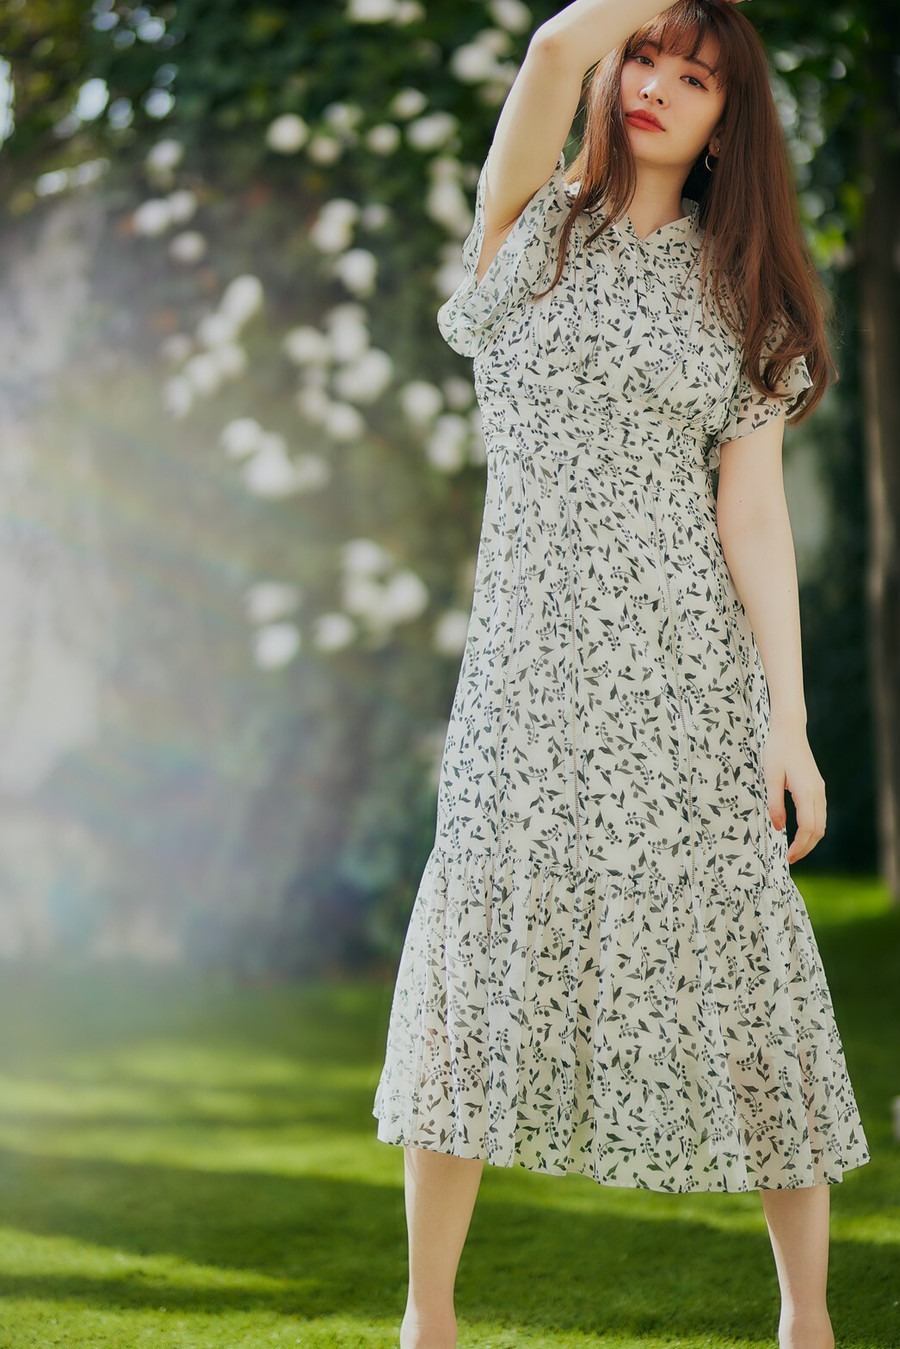 Muguet-printed Romantic Dress | viratindustries.com